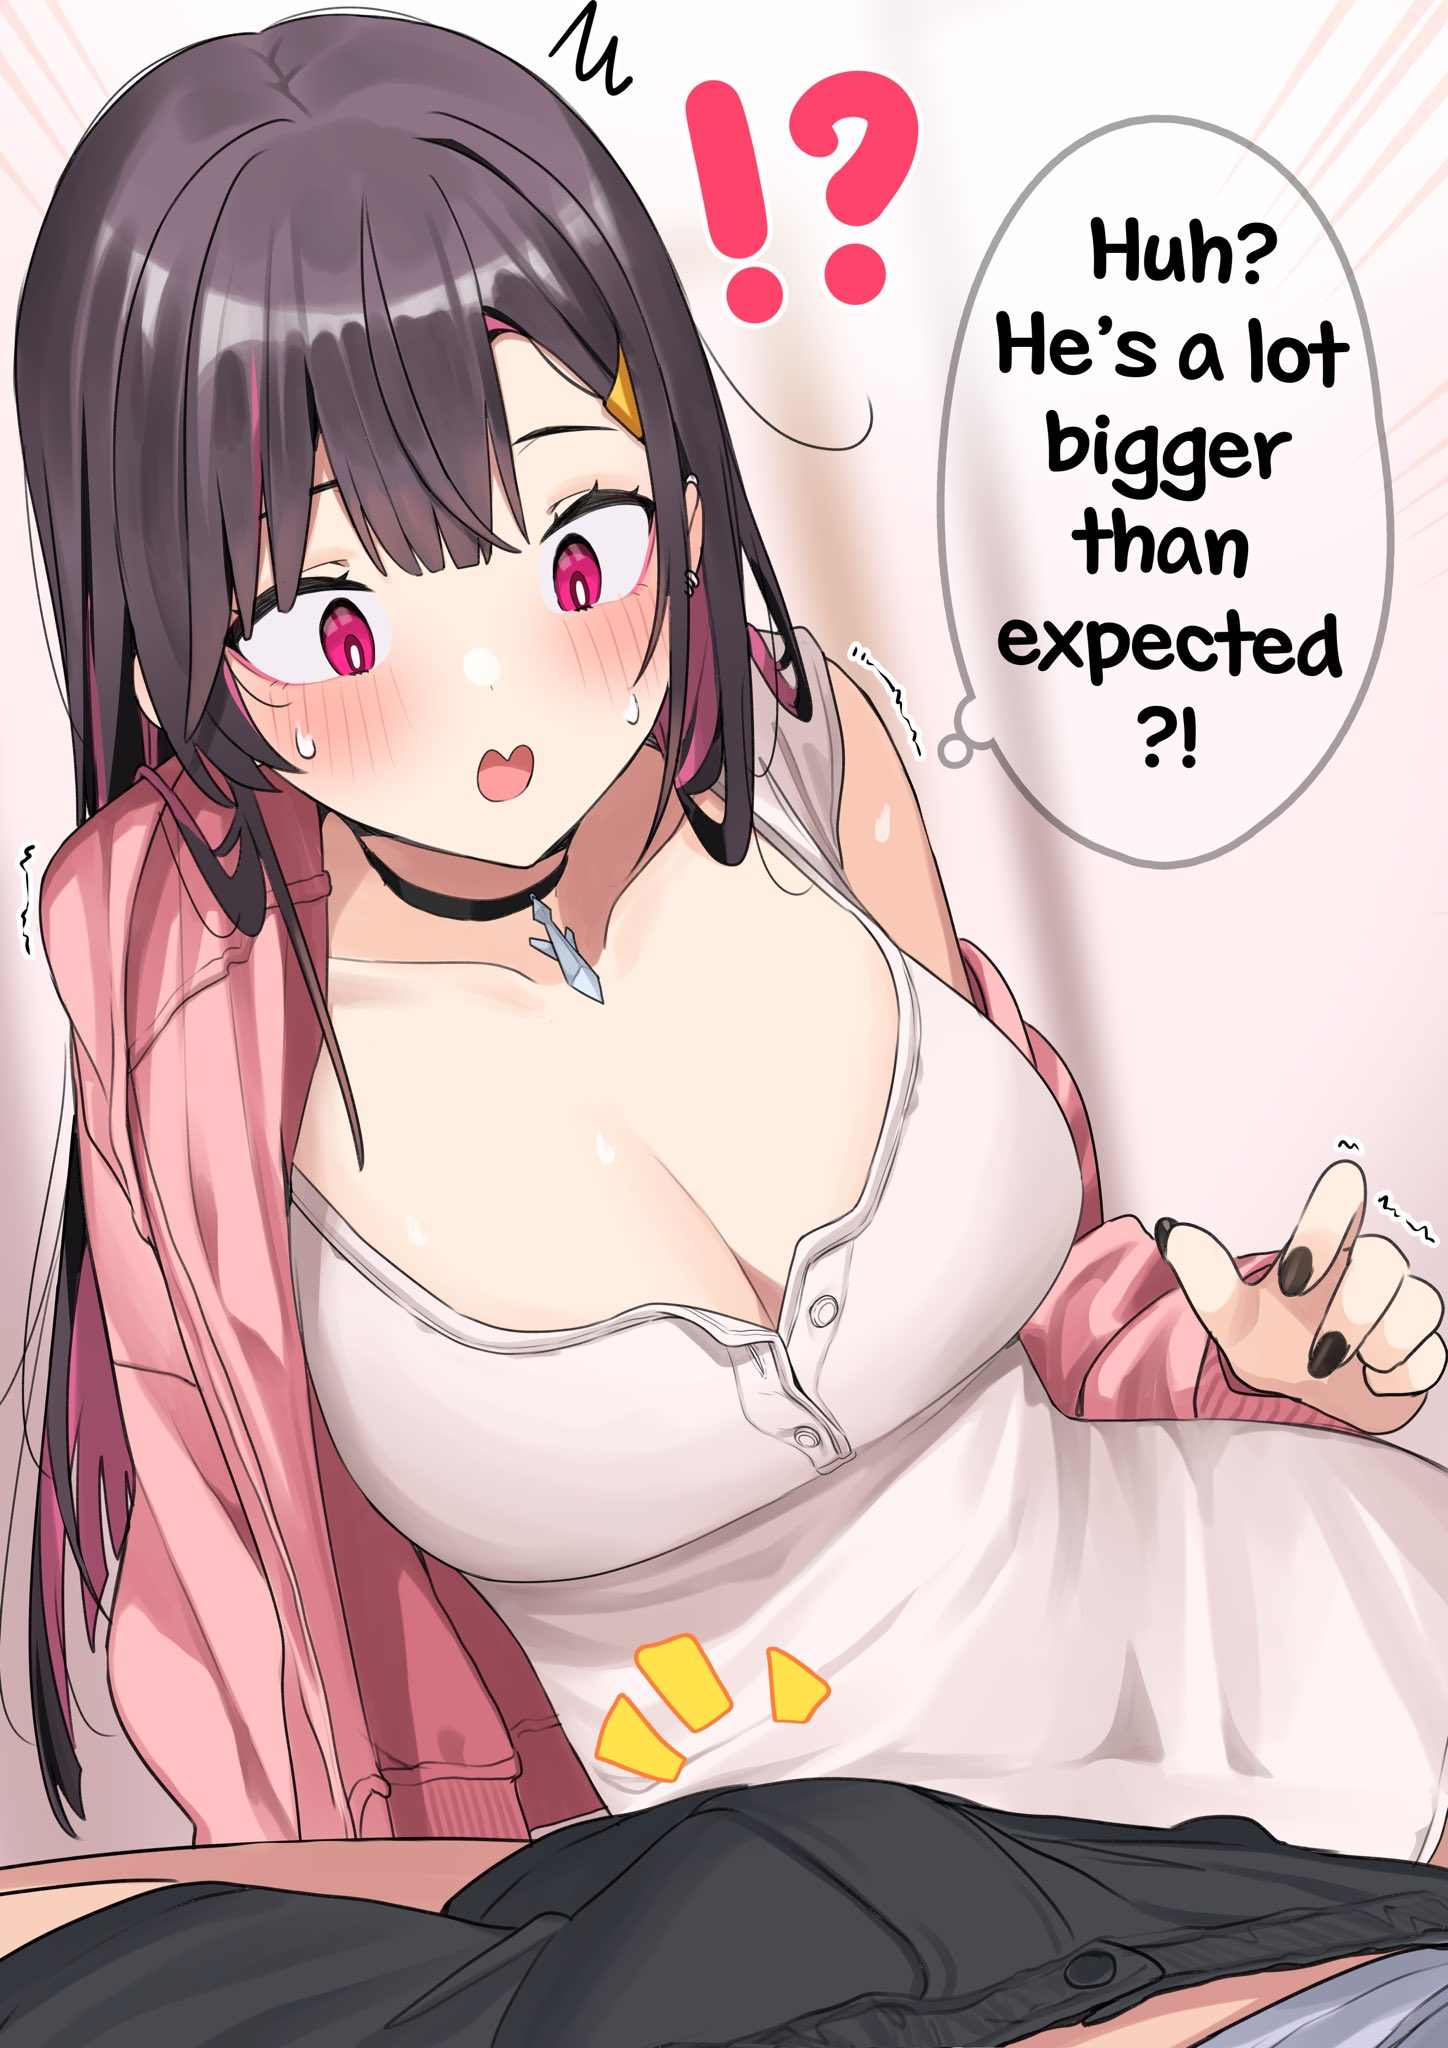 Tits bigger than expected